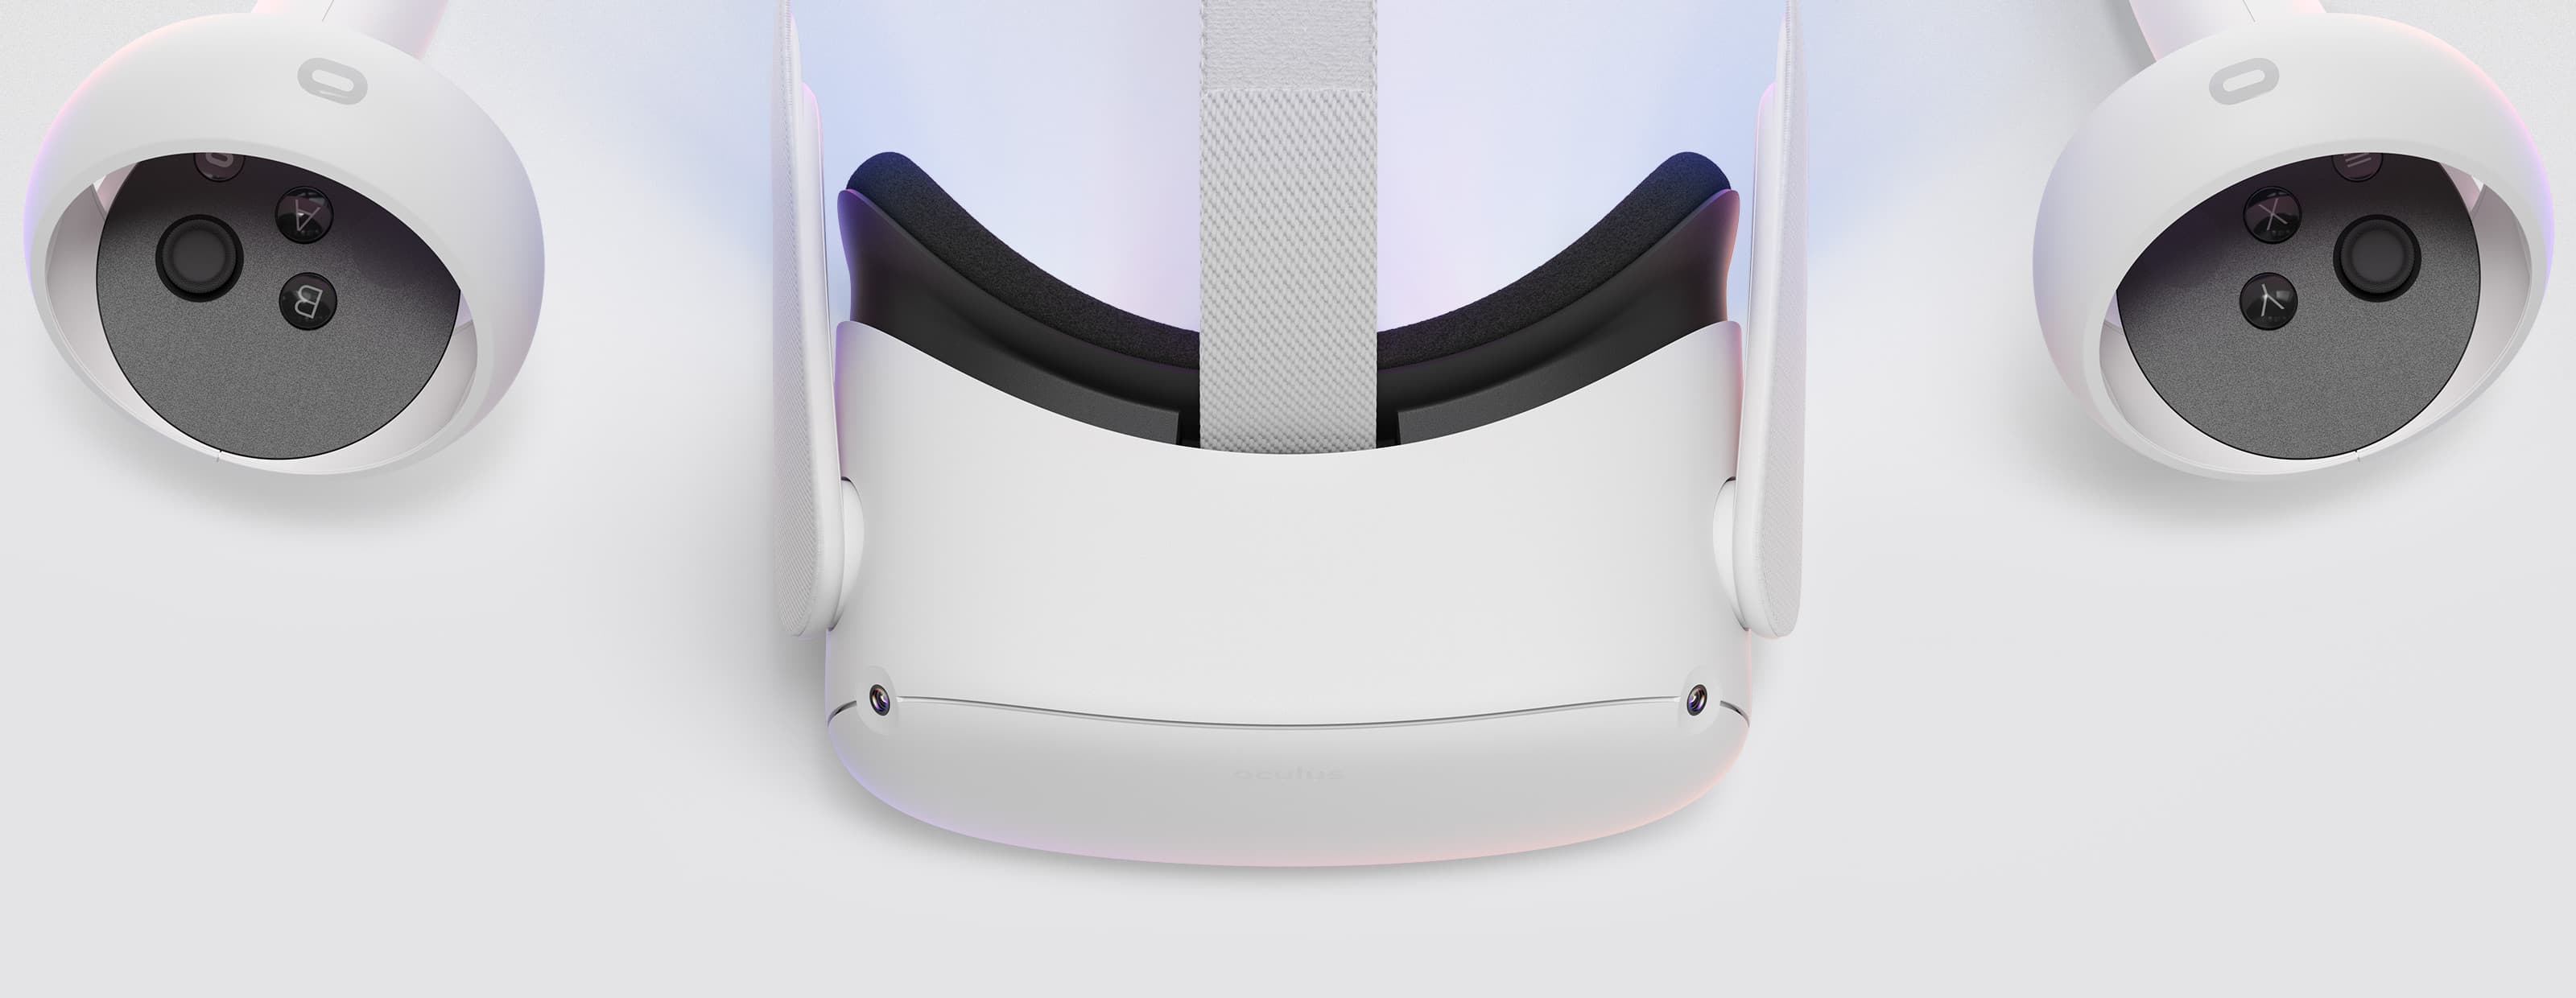 Oculus Quest 2, VR Headset, Facebook